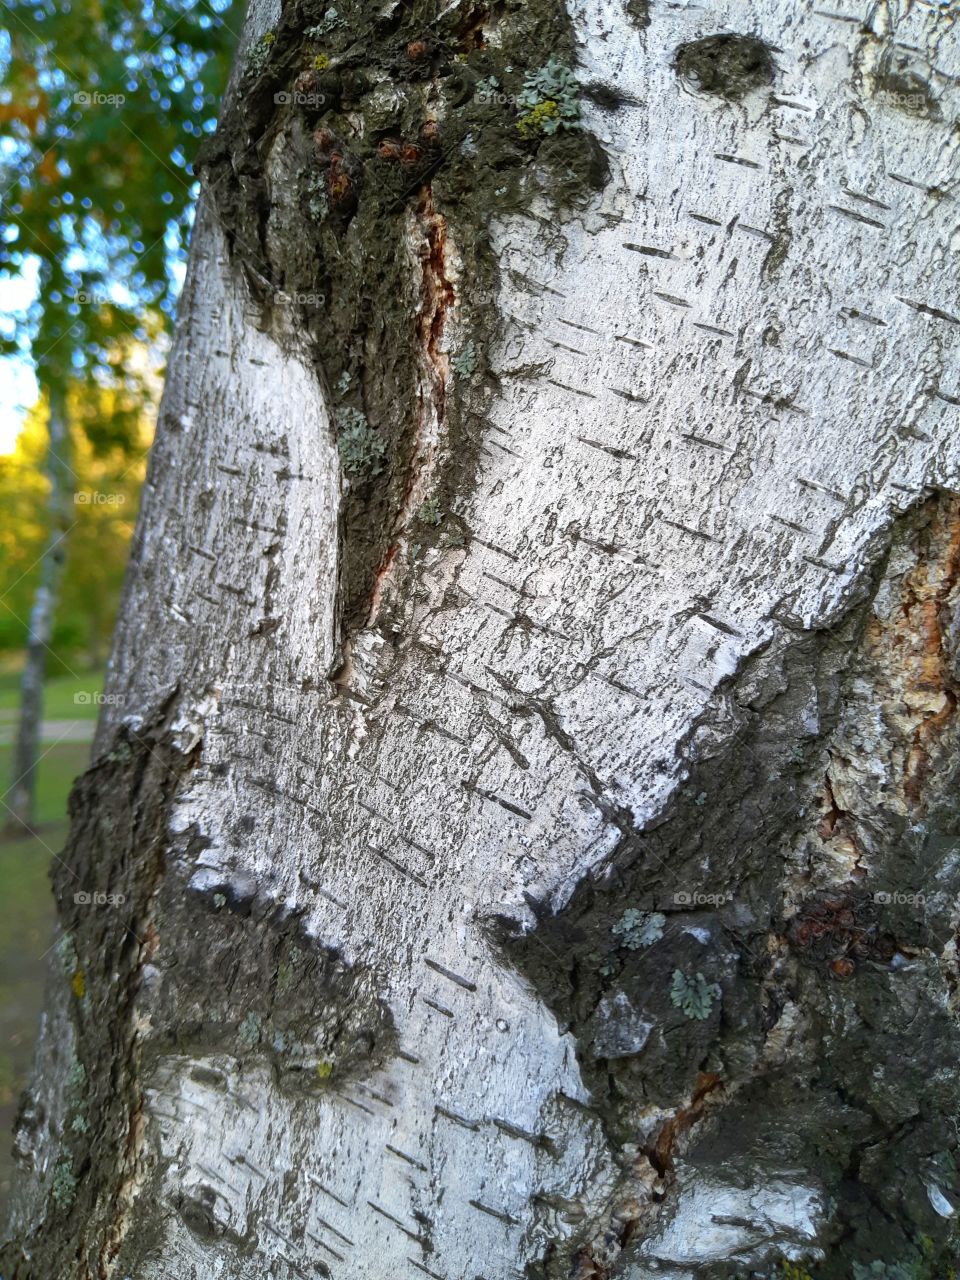 A birch tree